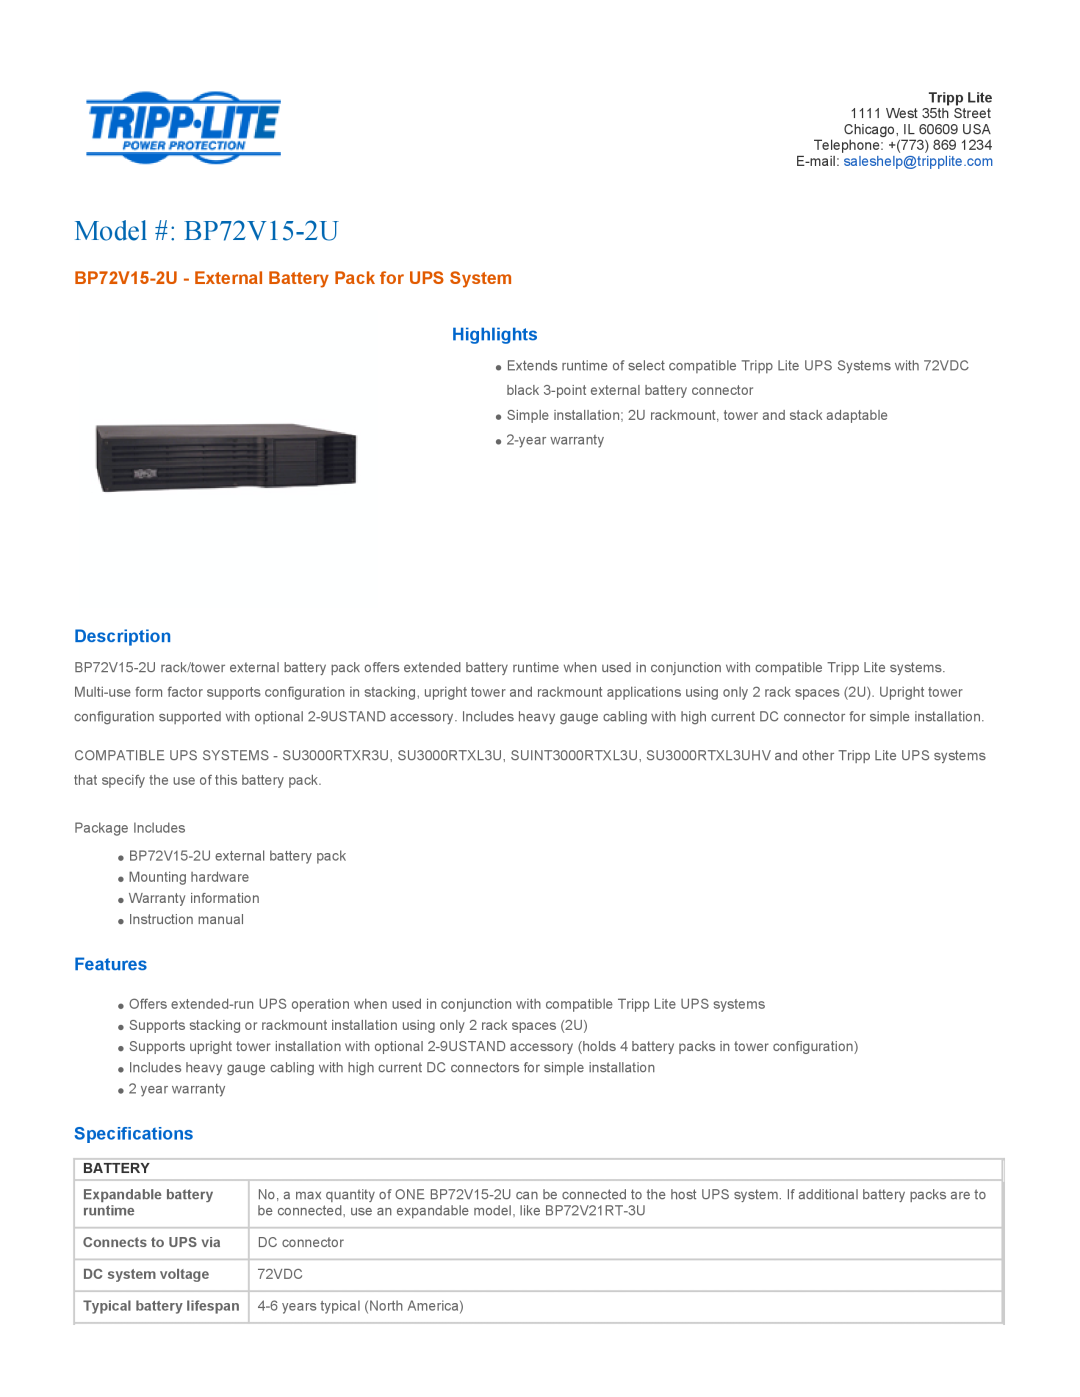 Tripp Lite specifications Highlights, Description, Features, Specifications, Battery, Model # BP72V15-2U 